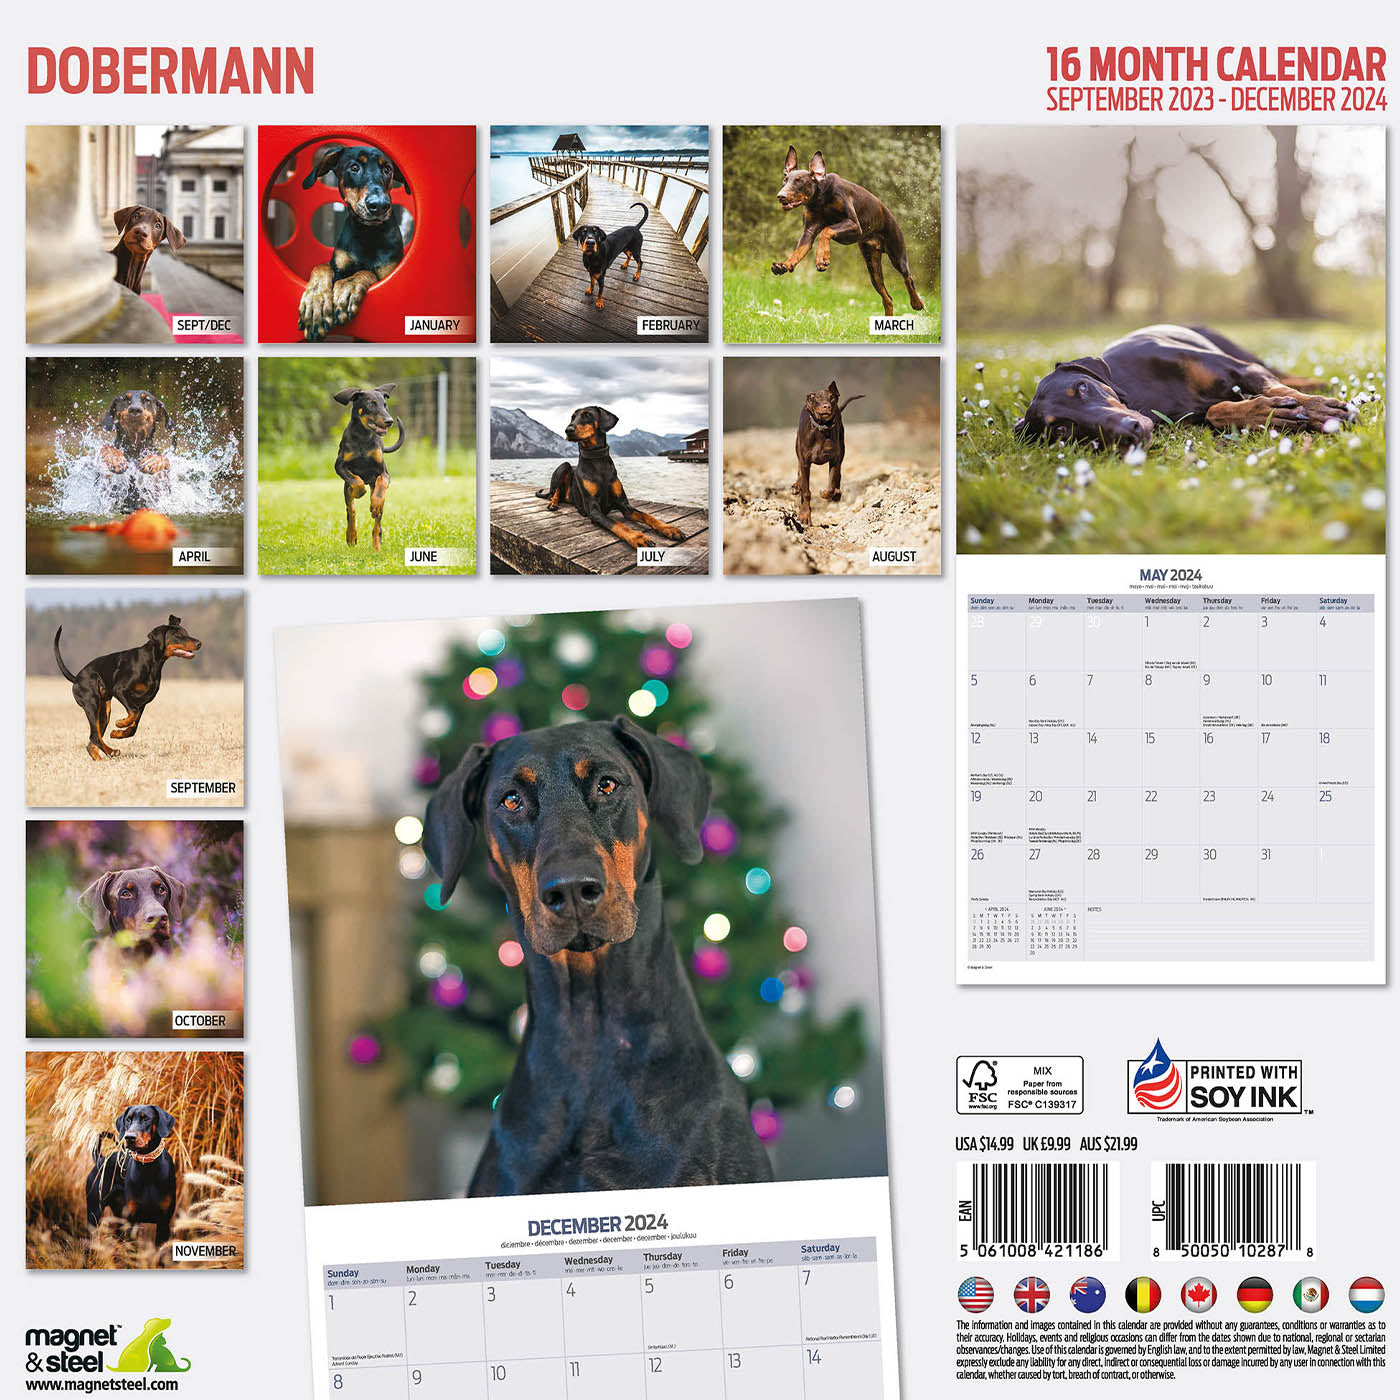 Doberman Traditional Calendar 2024